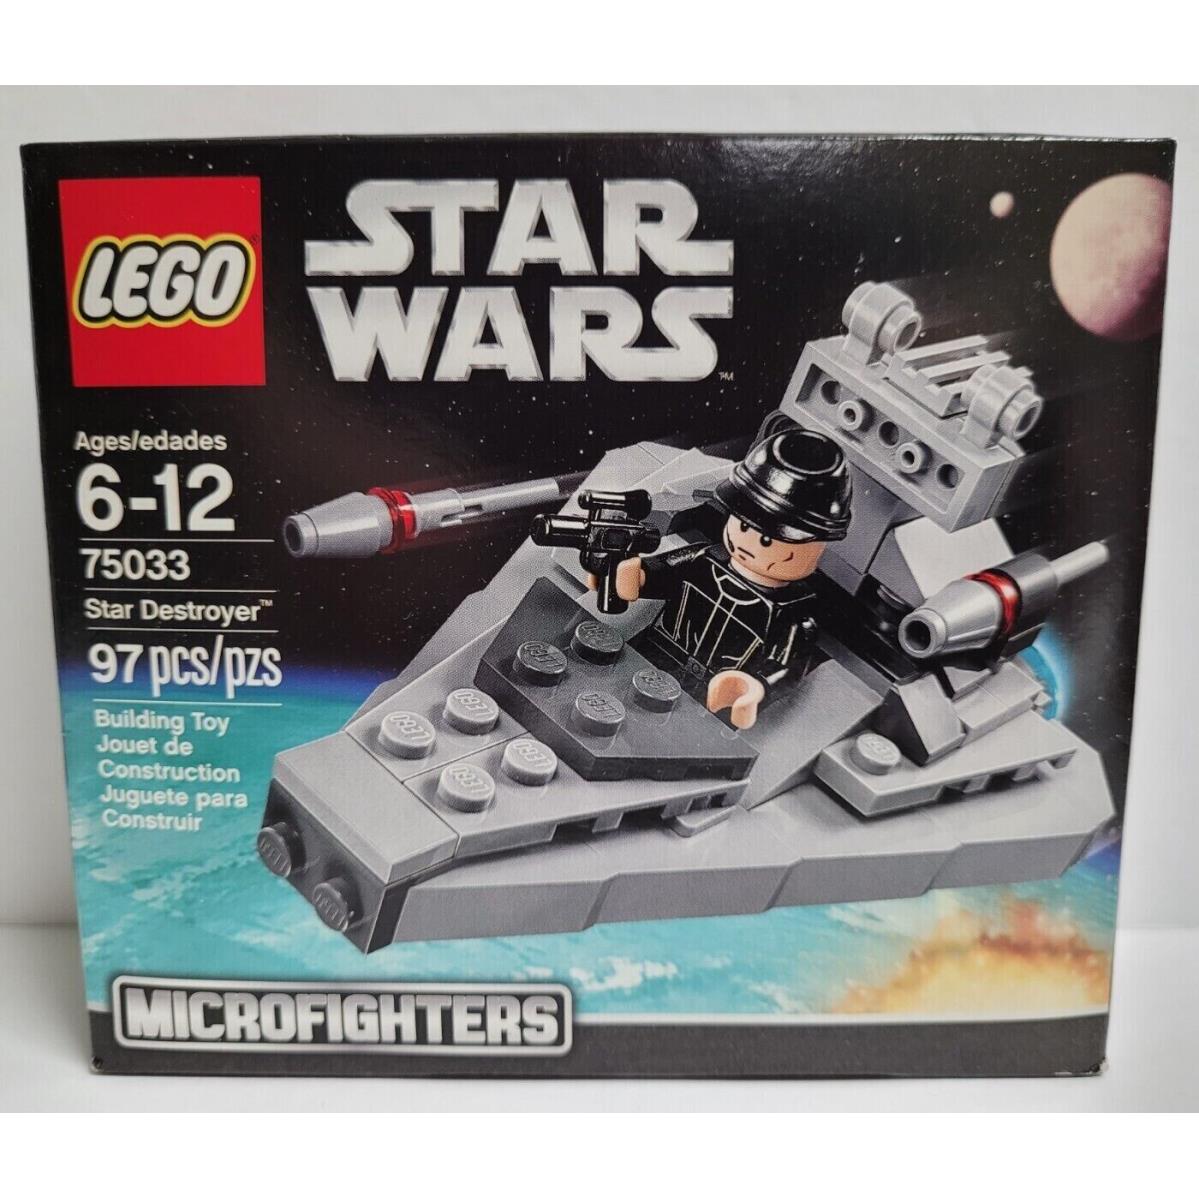 Lego Star Wars 75033 Star Destroyer Building Kit 100 Pcs Retired Playset